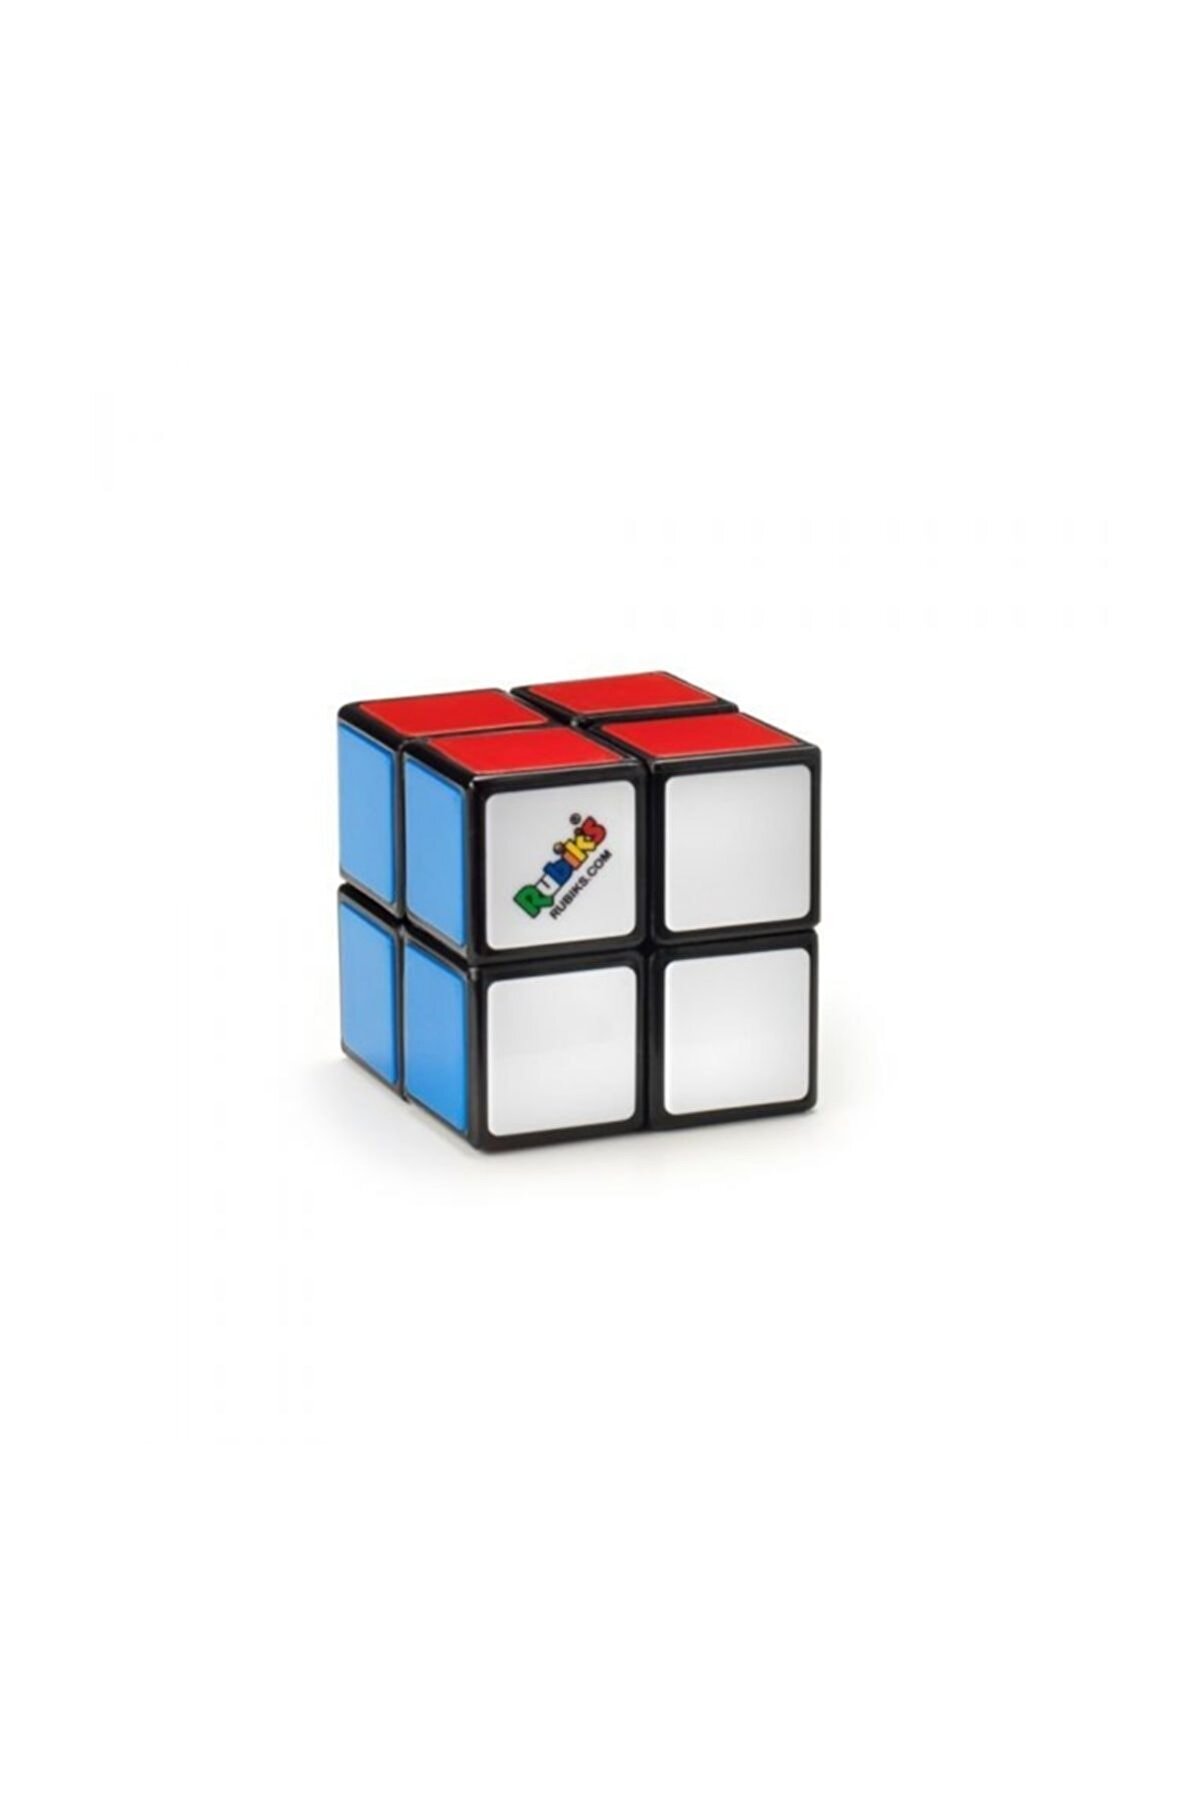 Rubiks Rubik's Mini 2 x 2 Cube